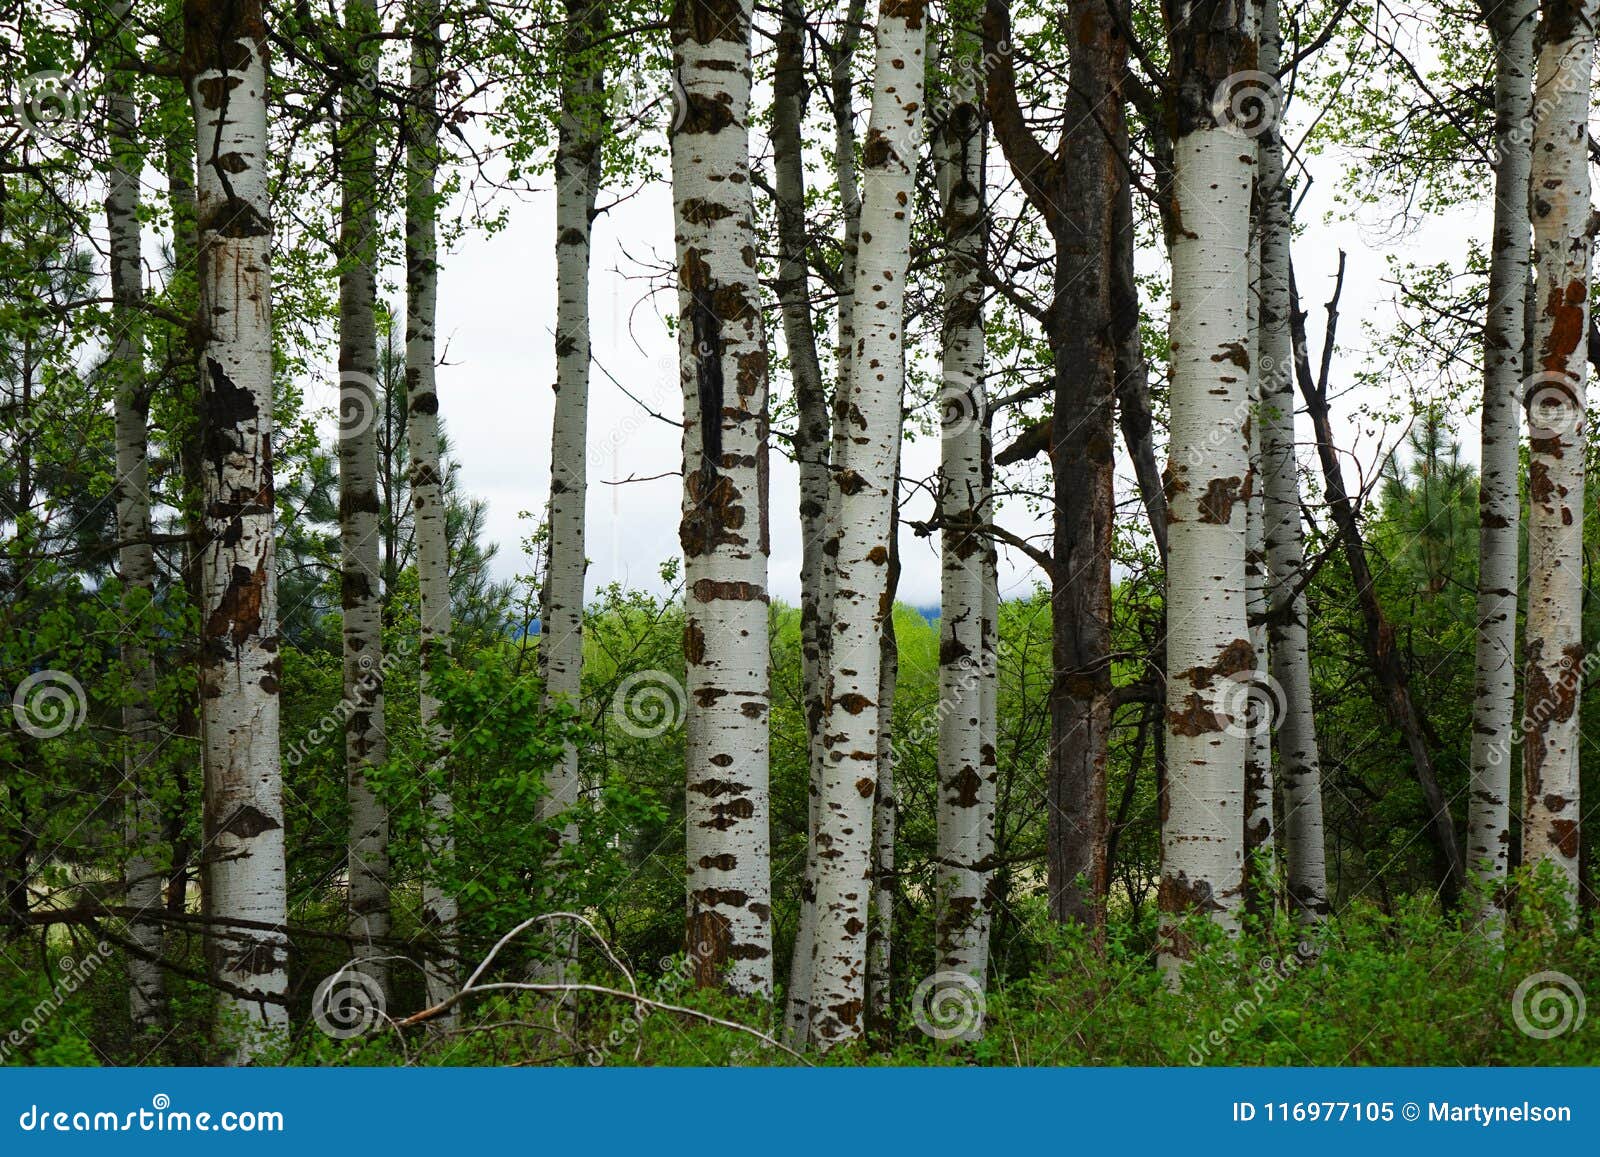 aspen forest near missoula, montana